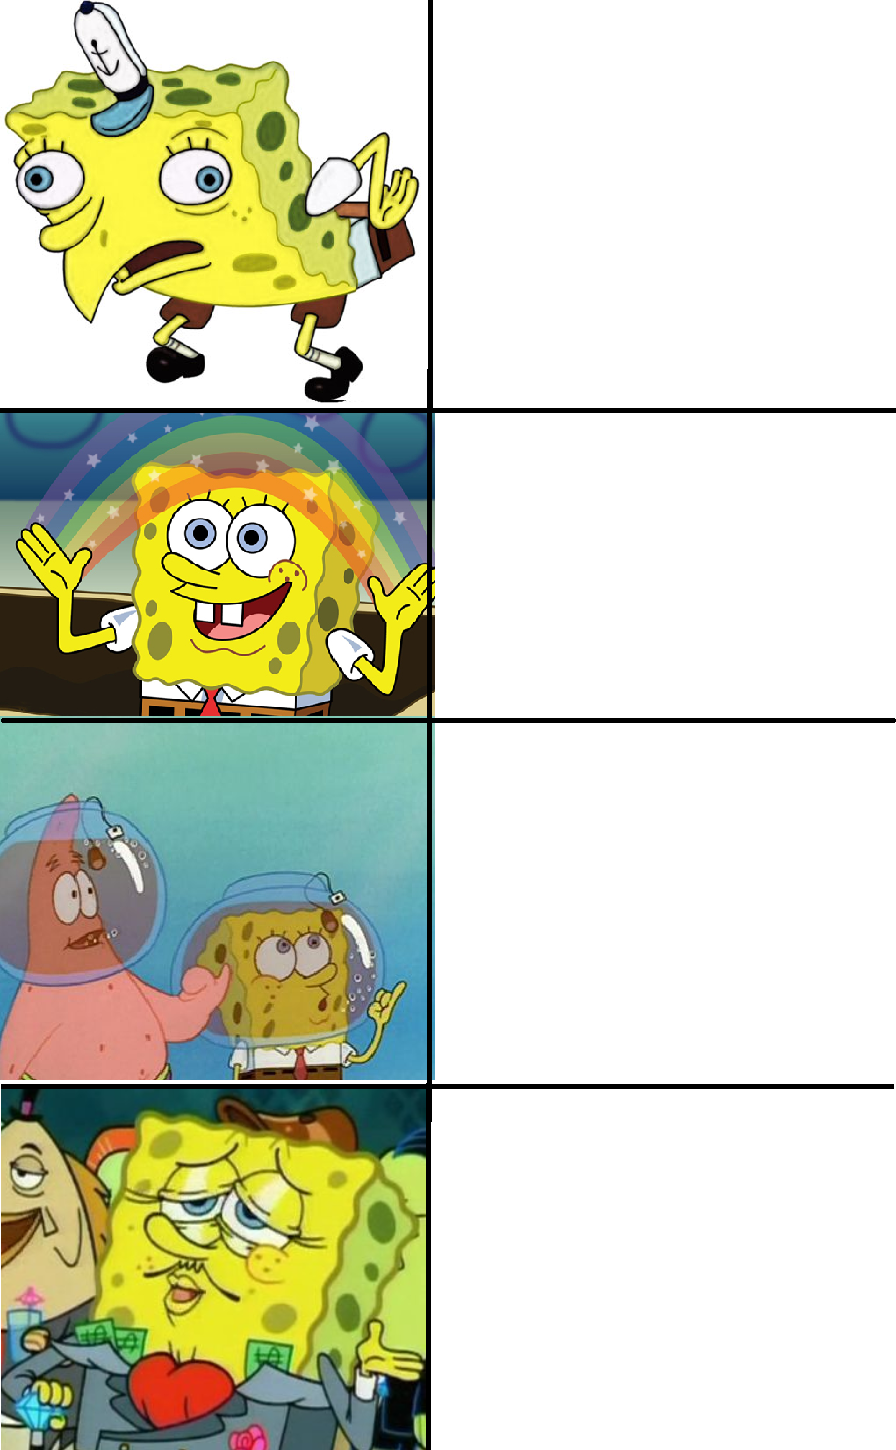 Expanding fancy spongebob Meme Generator. 